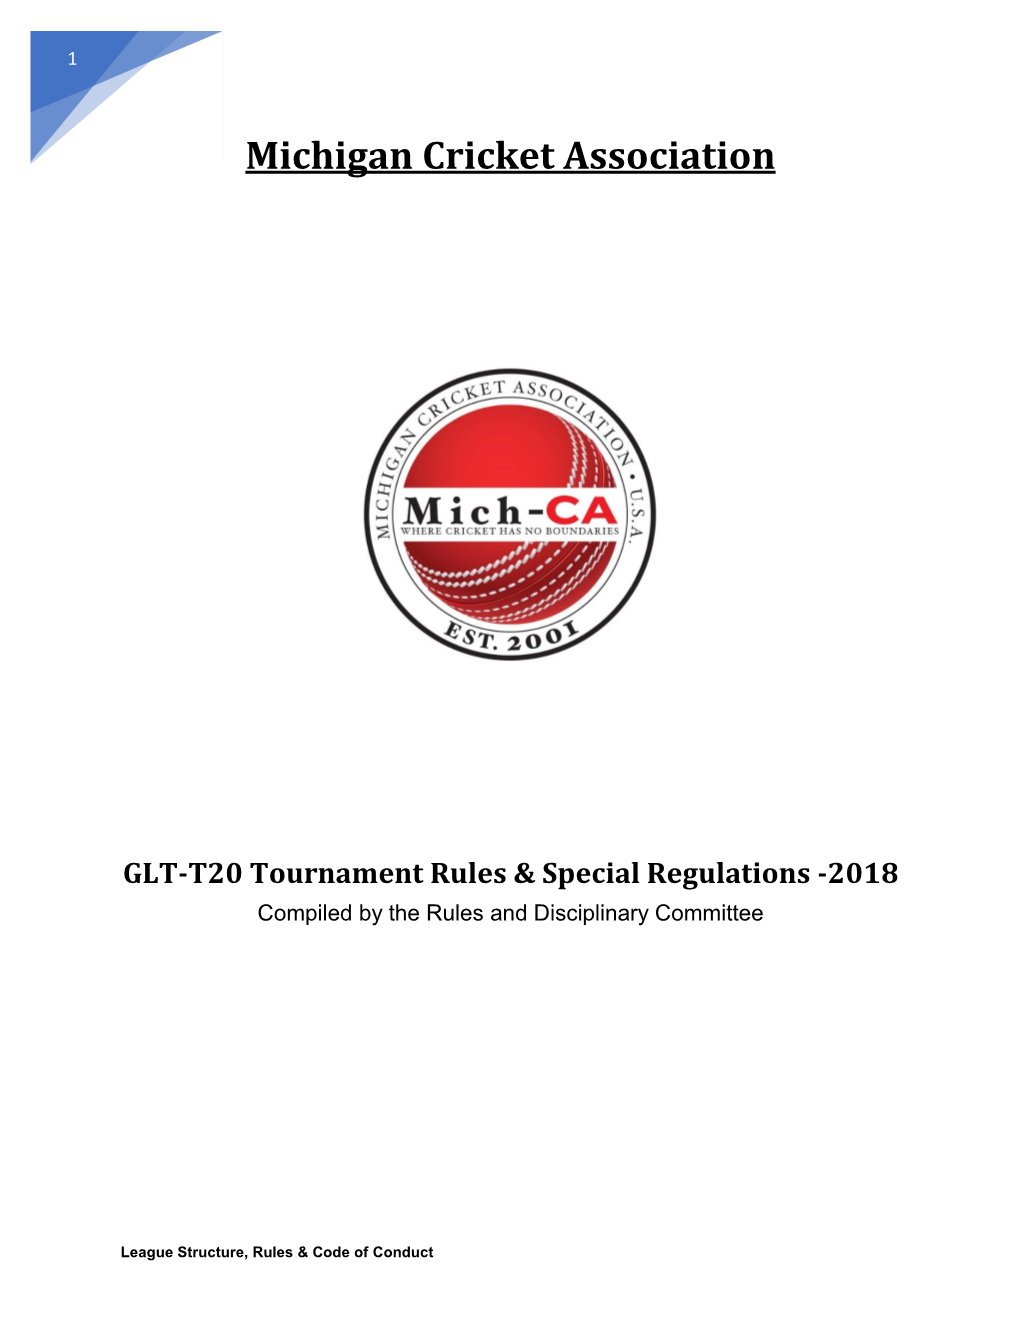 Michigan Cricket Association GLT-T20 Tournament Rules & Special Regulations